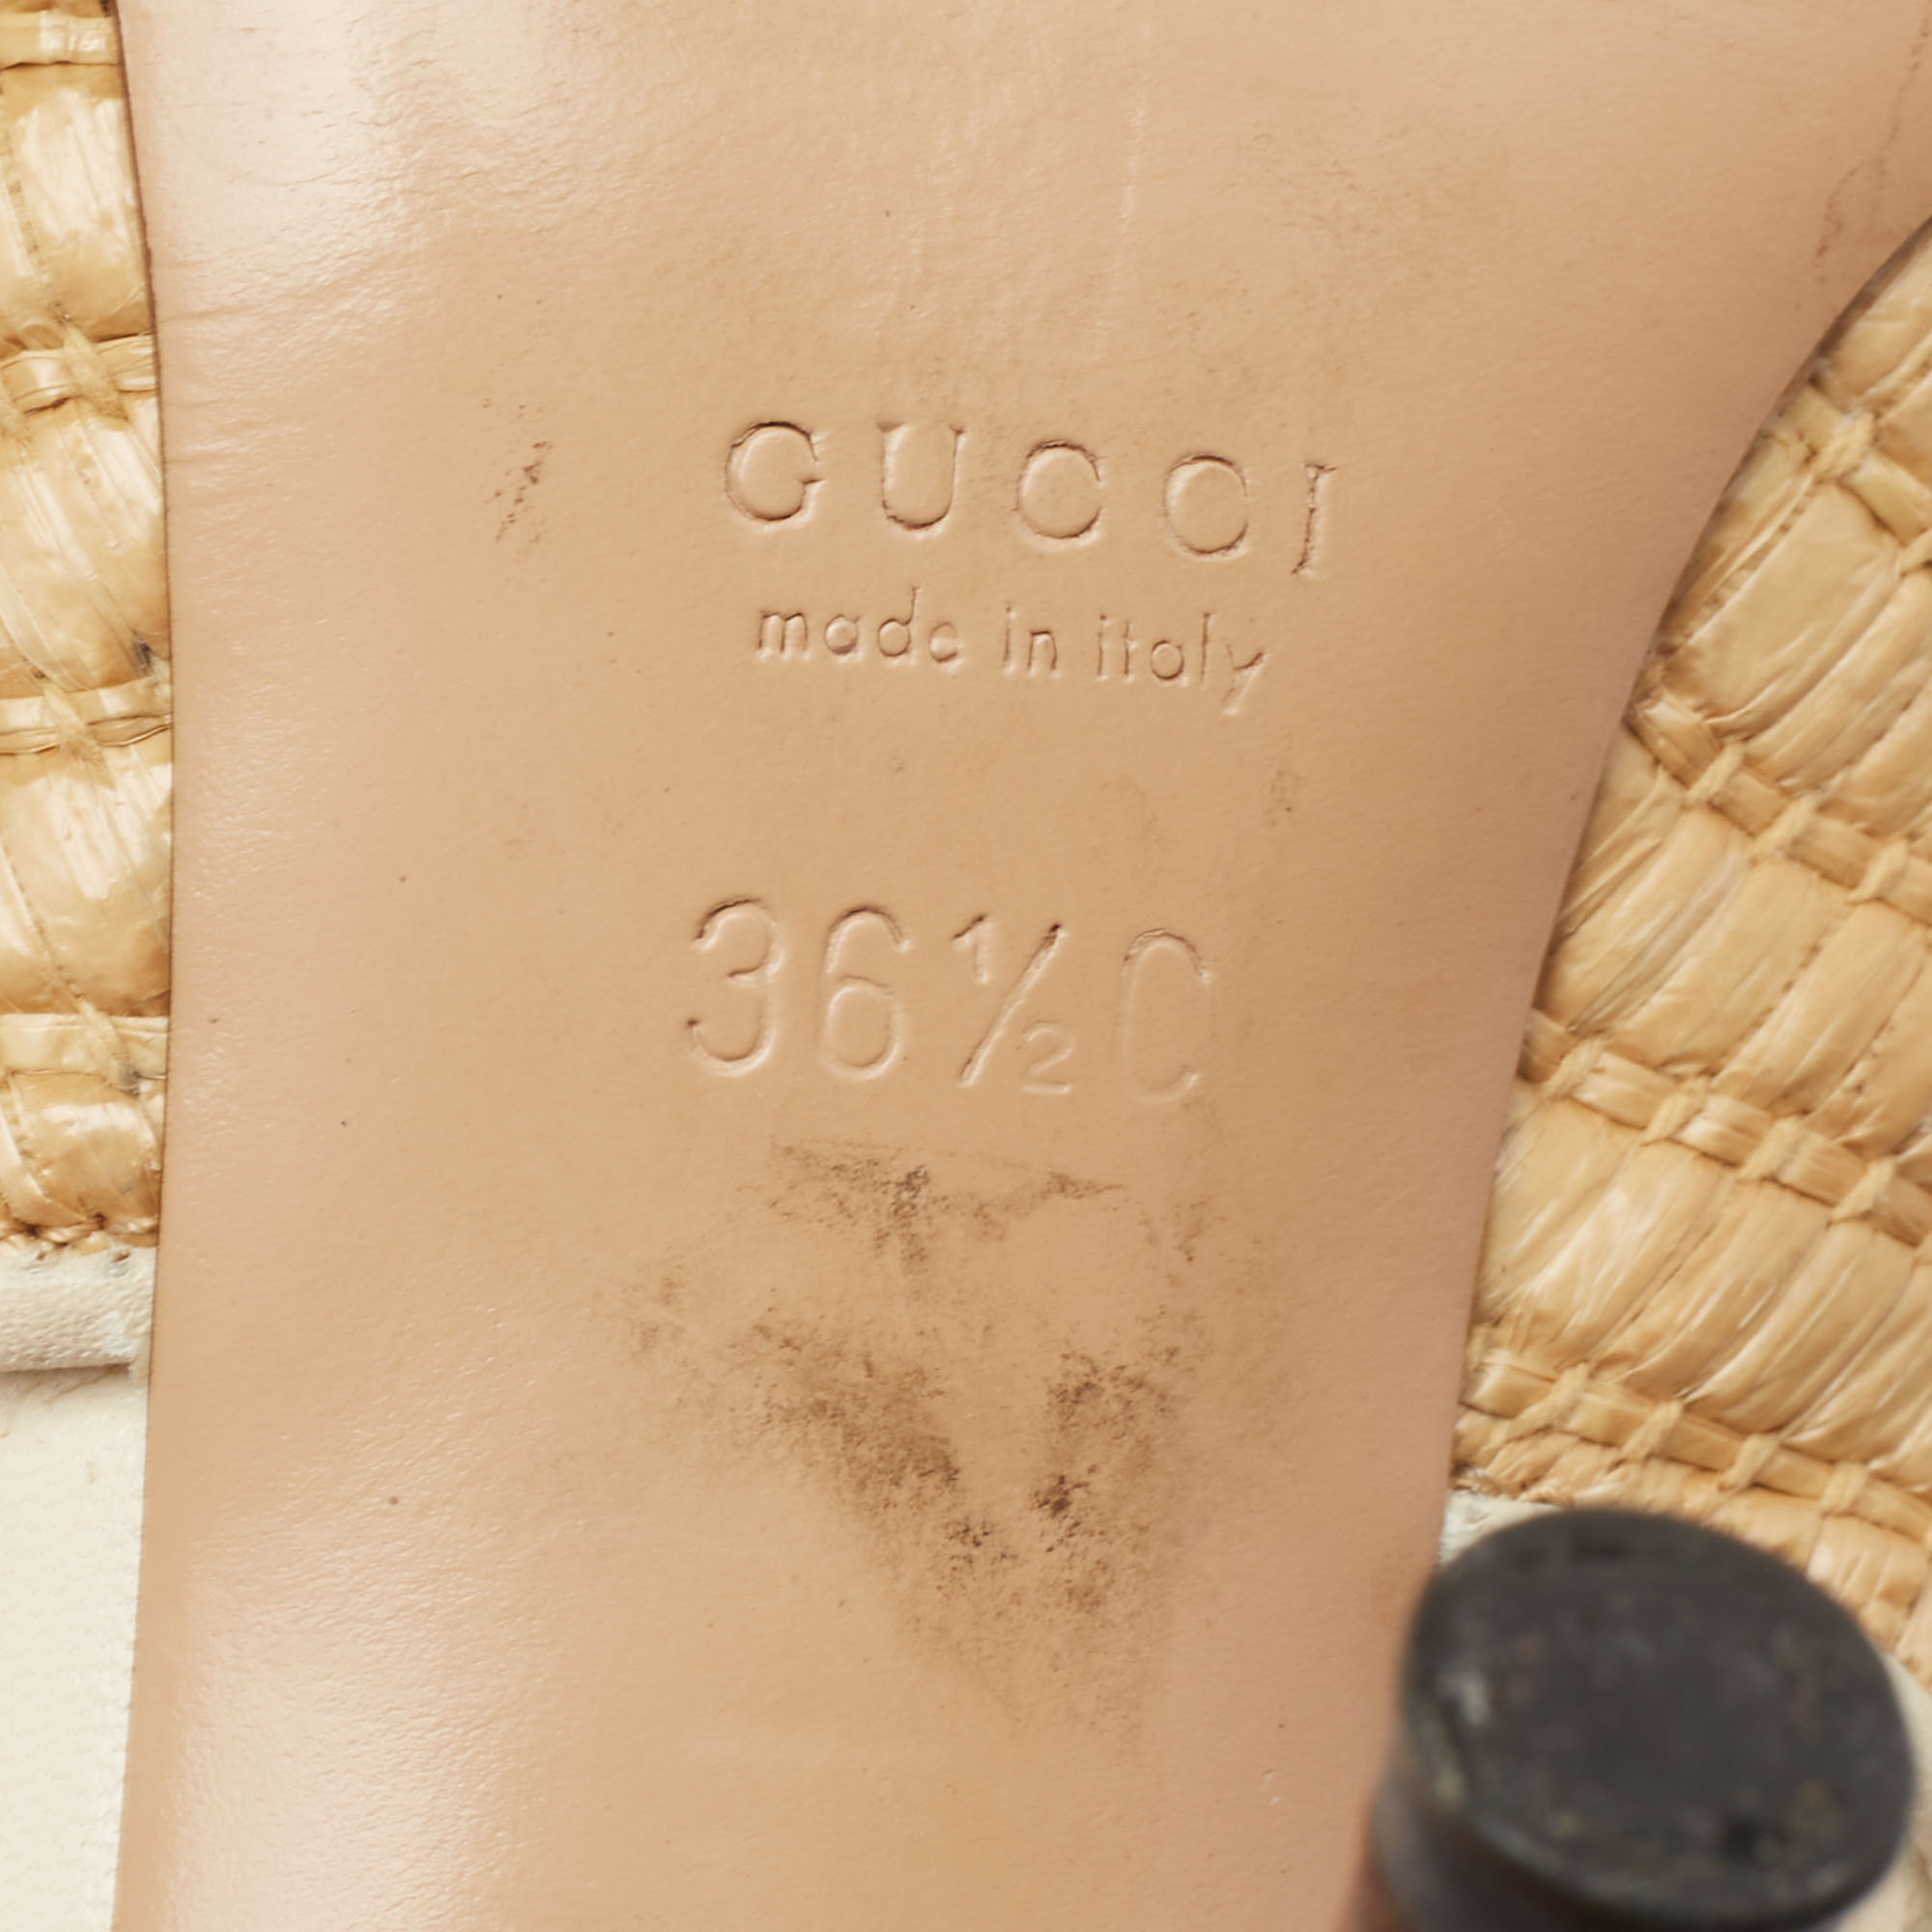 Gucci Grey/Beige Raffia And Leather Bamboo Horsebit Slingback Sandals Size 36.5